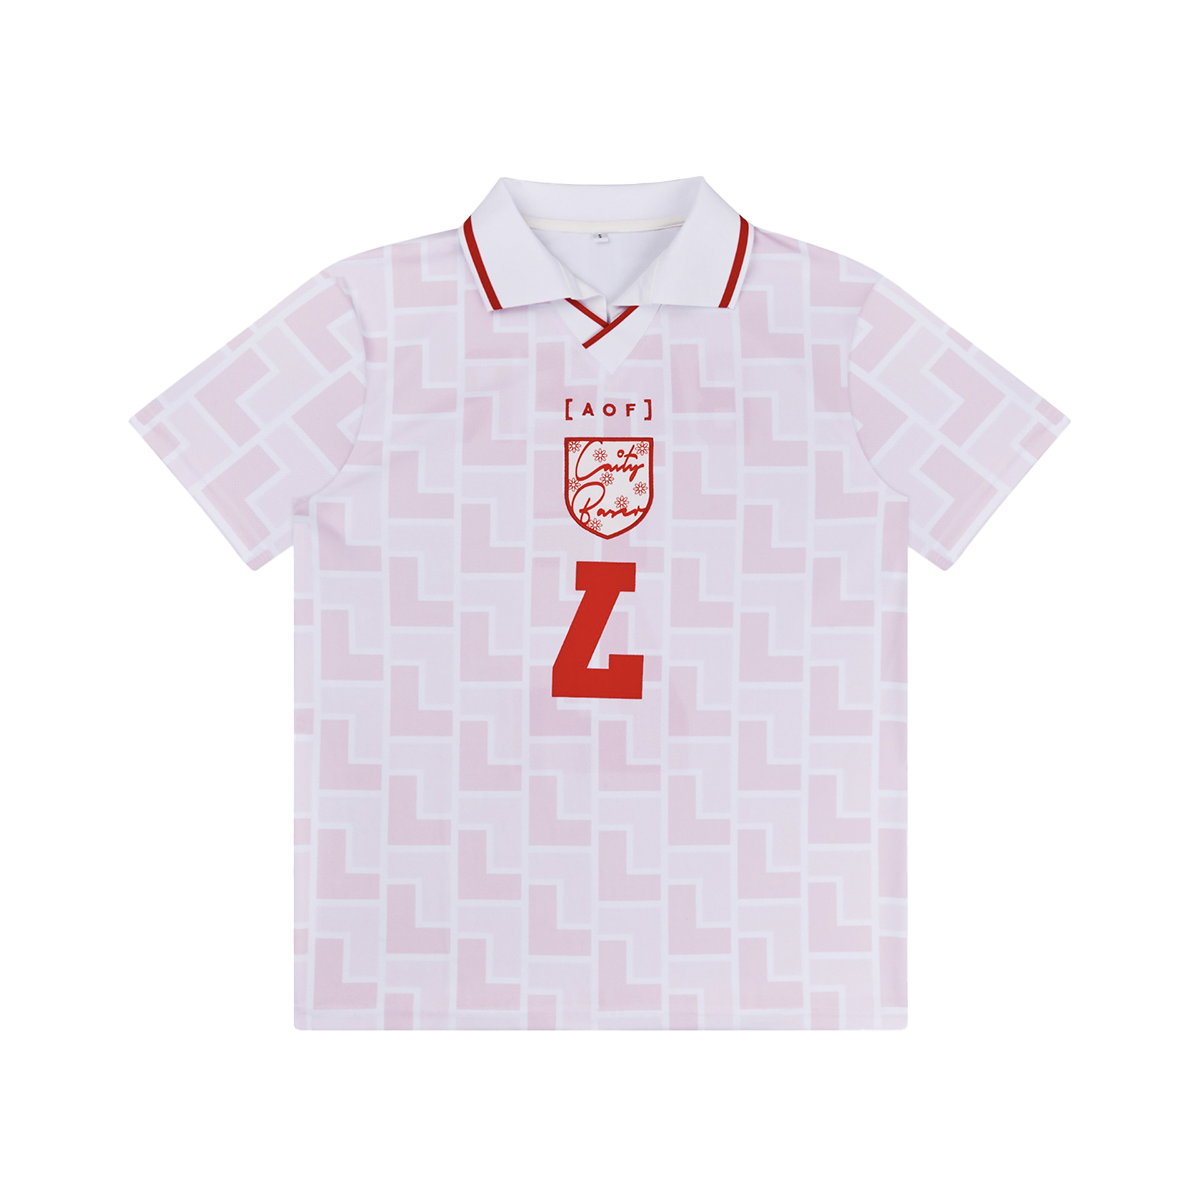 Caity Baser - AOF x Caity Baser Football Shirt